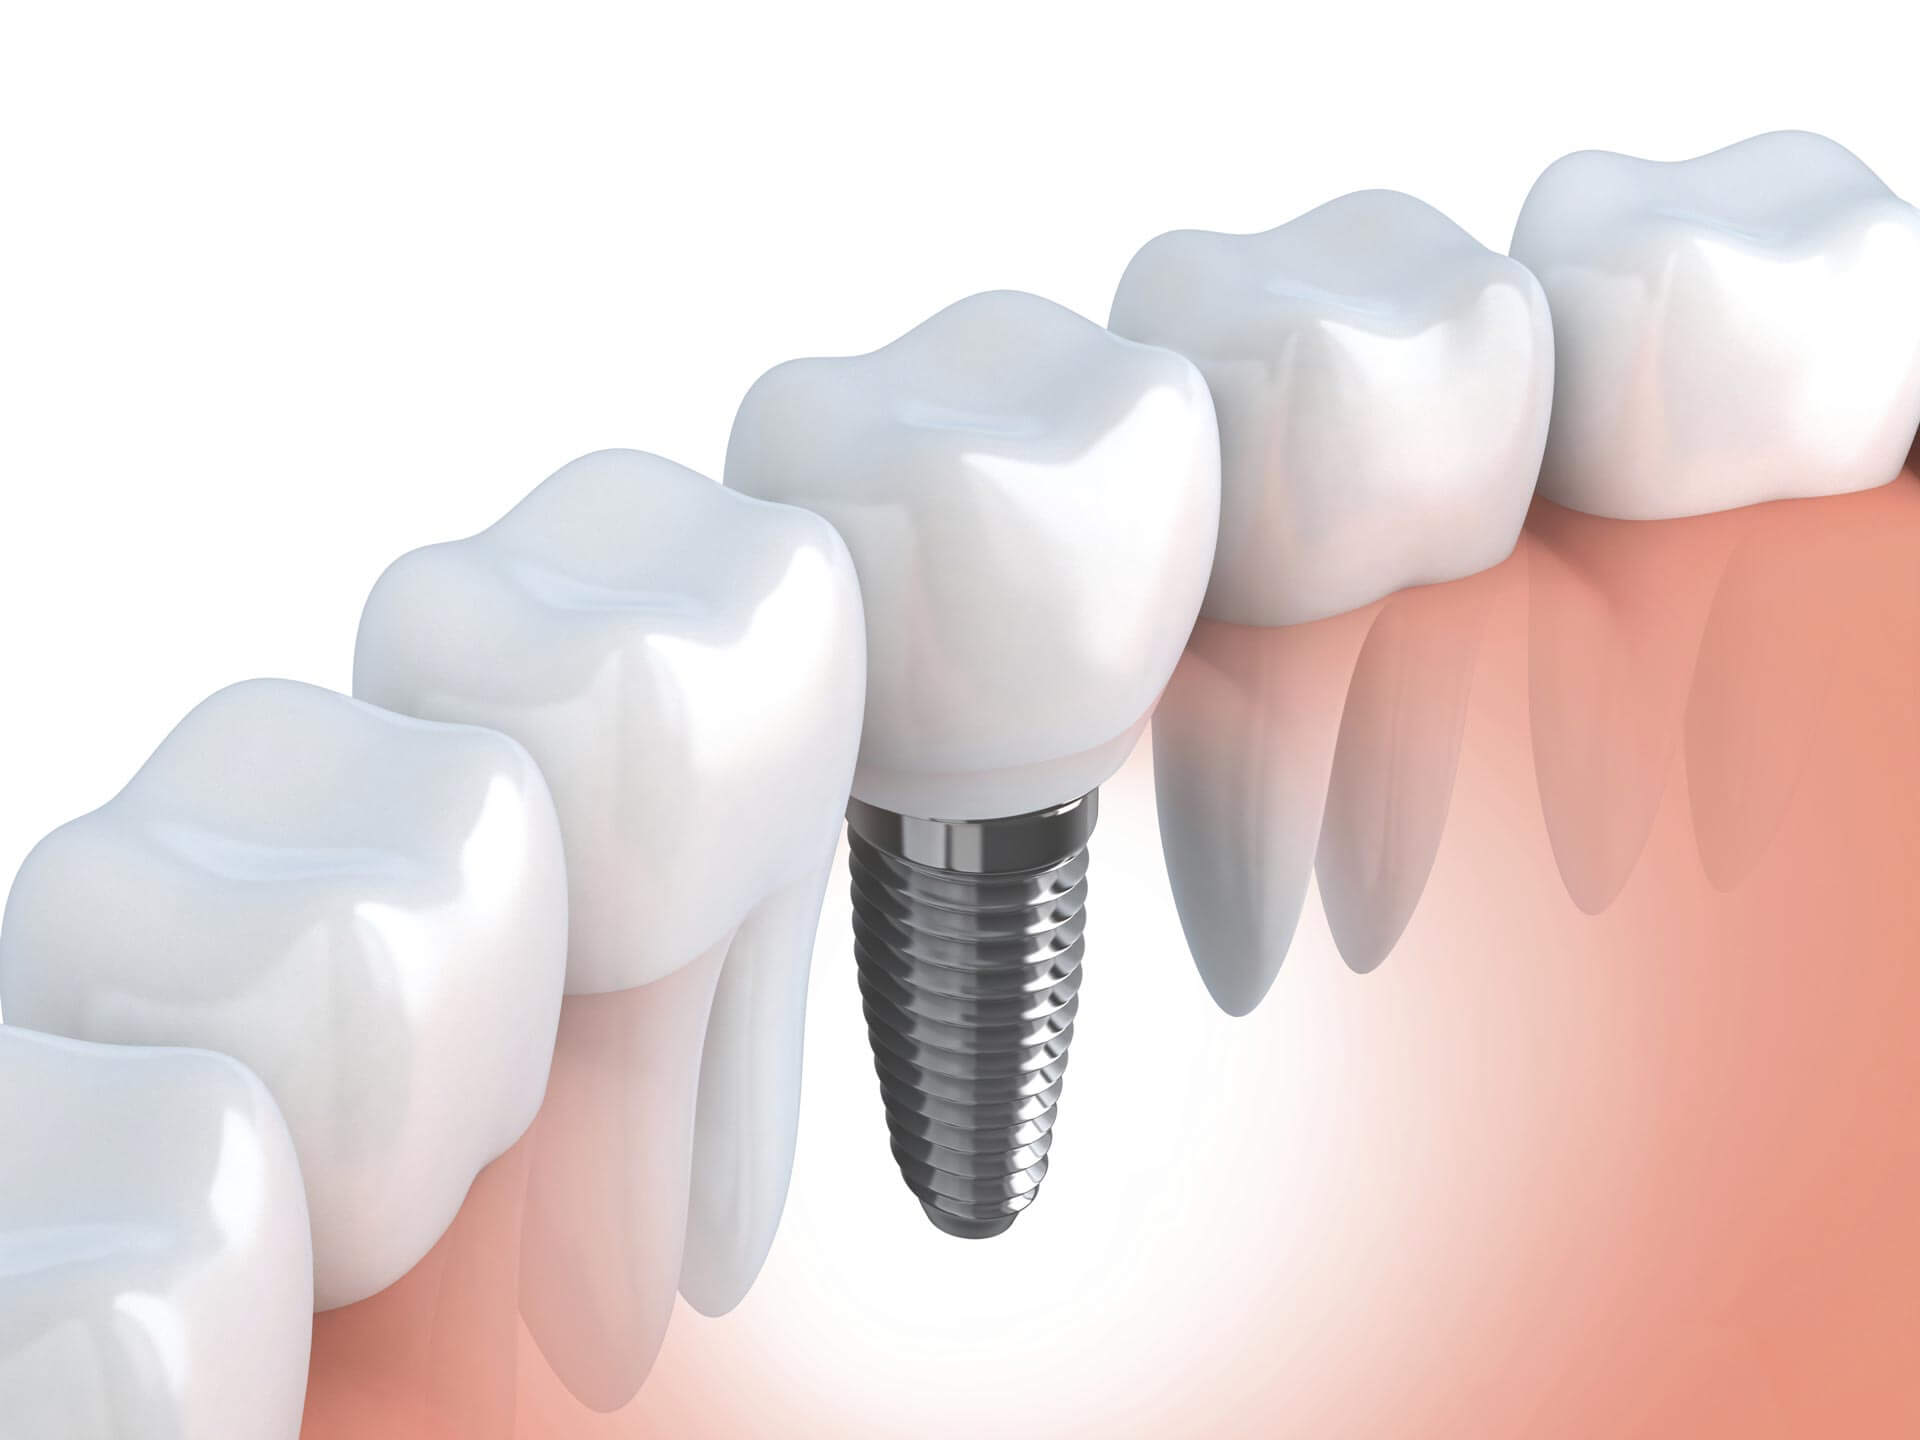 Implant dentaire clinique Cossette & Ruel